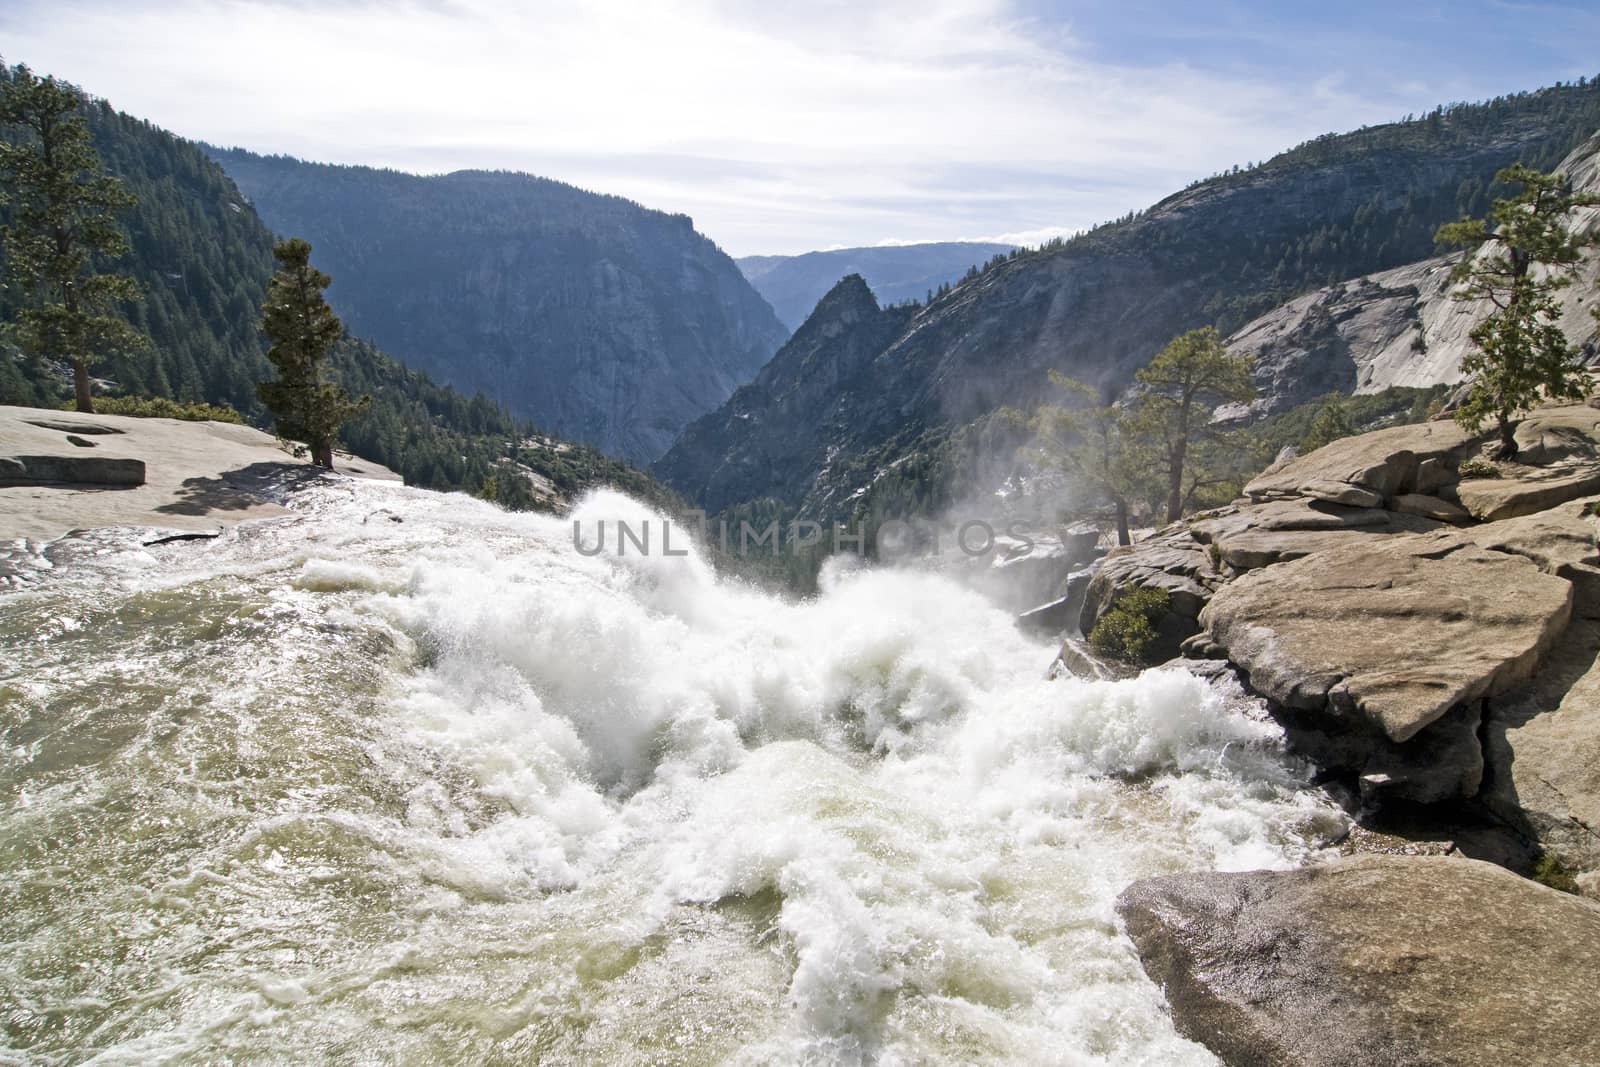 Nevada Falls (Merced River) in Yosemite National Park, CA by Njean